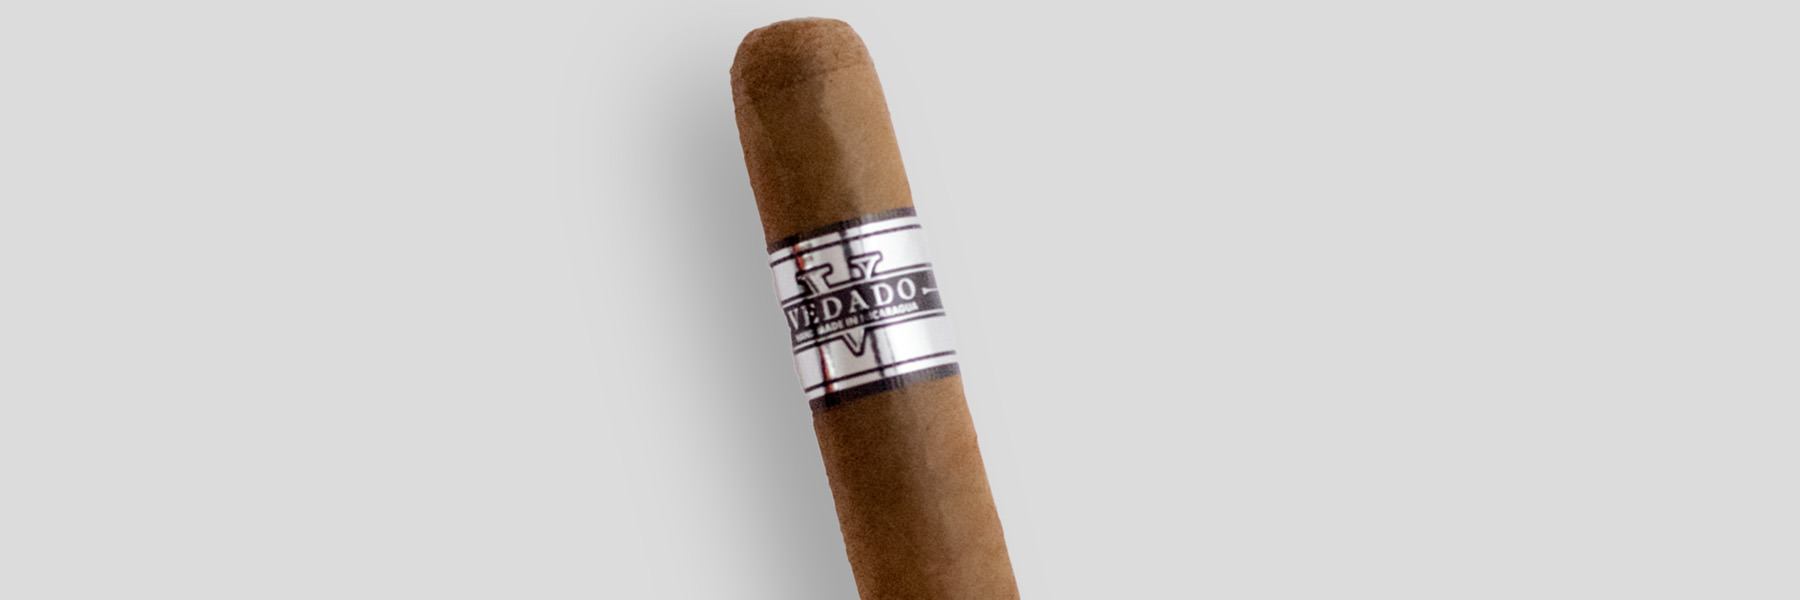 Vedado classic Cigars